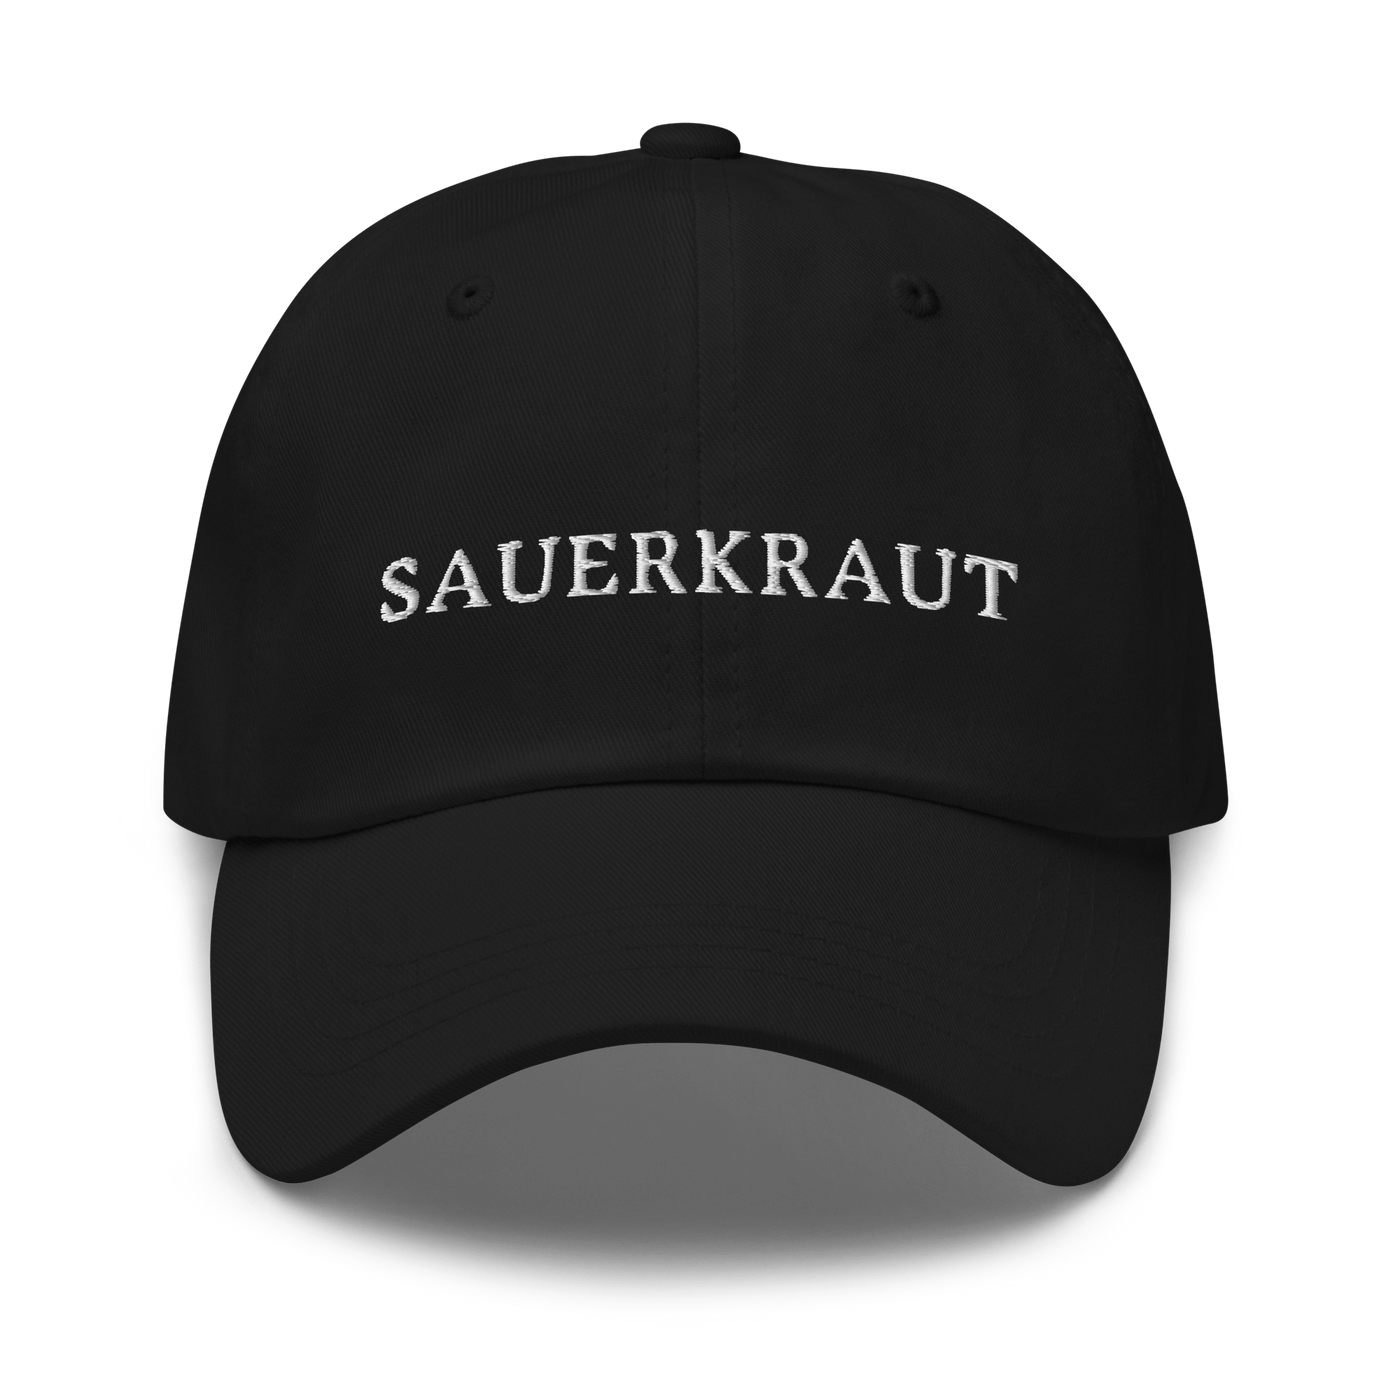 Sauerkraut Dad hat - Black - - Just Another Cap Store